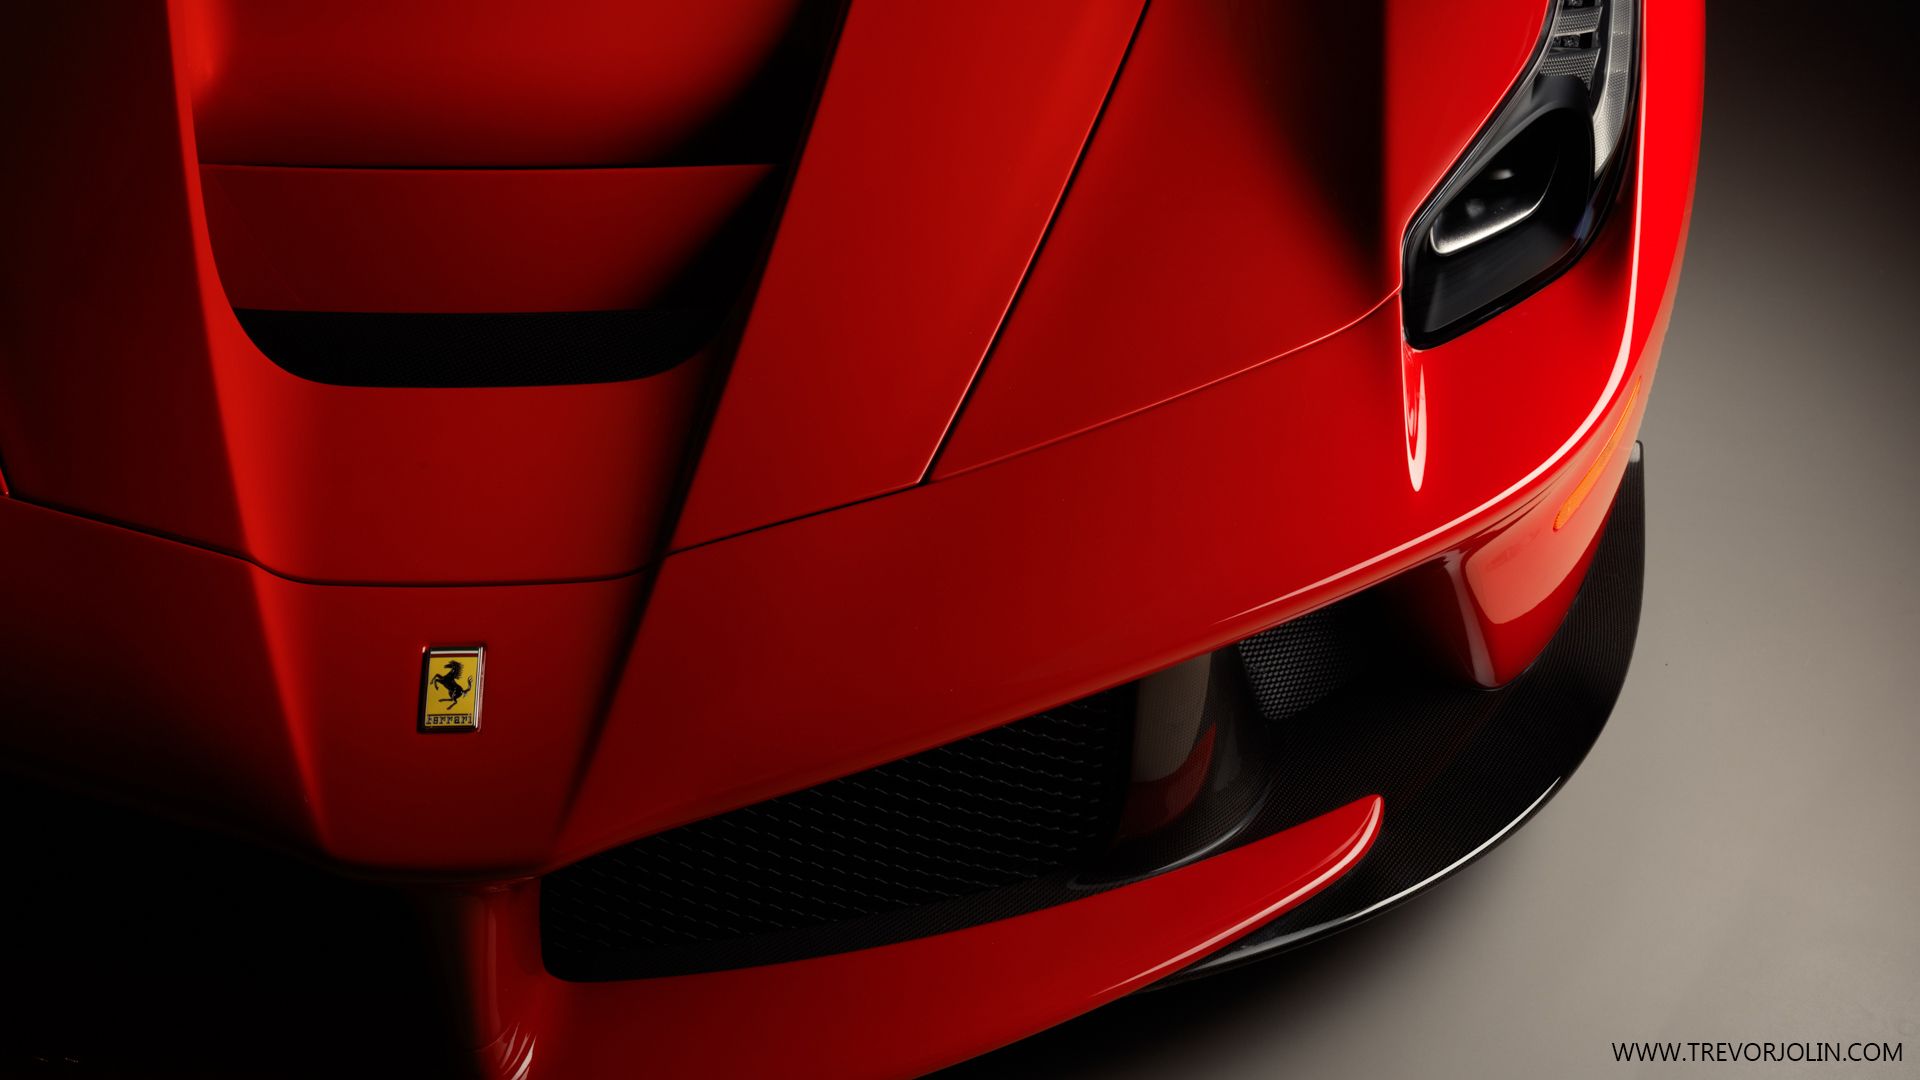 Su fondo de pantalla ridículamente impresionante Ferrari LaFerrari está aquí